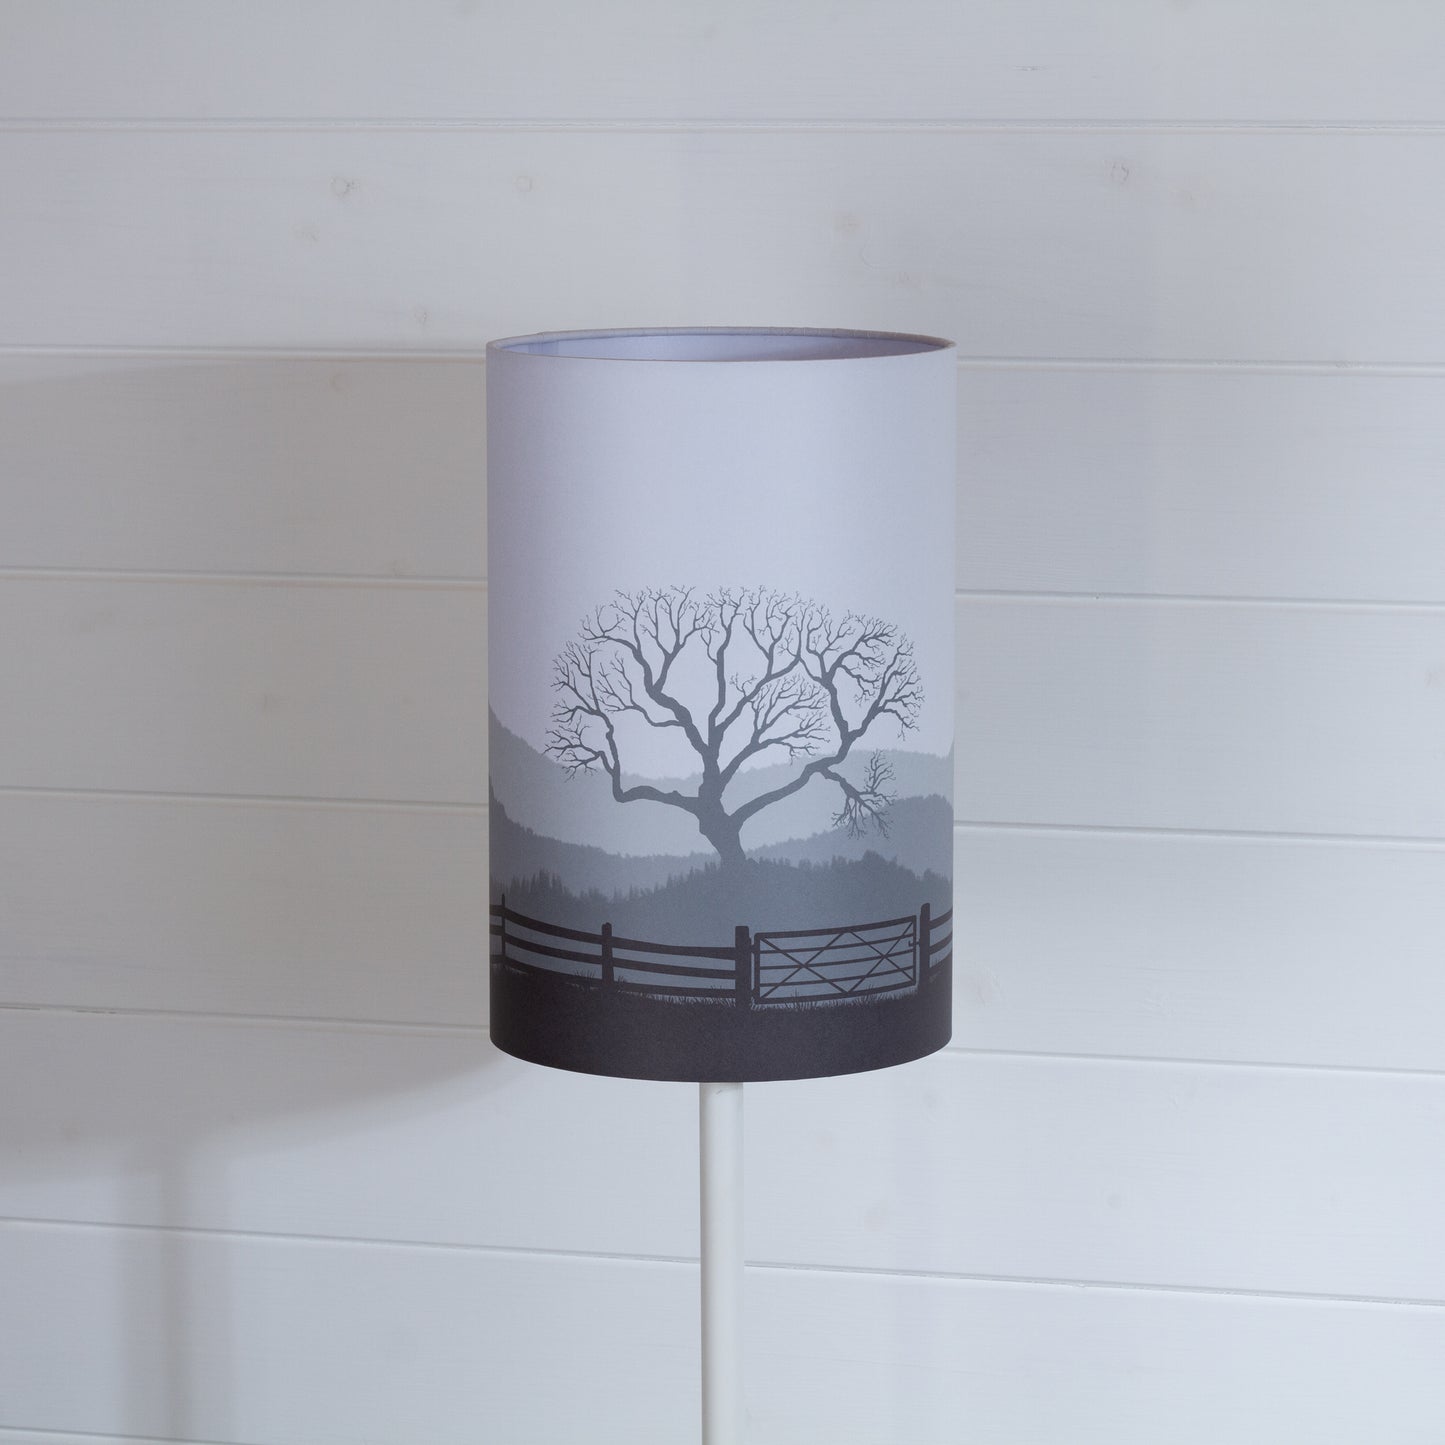 Drum Lamp Shade - Landscape Gate Grey, 20cm(d) x 30cm(h)